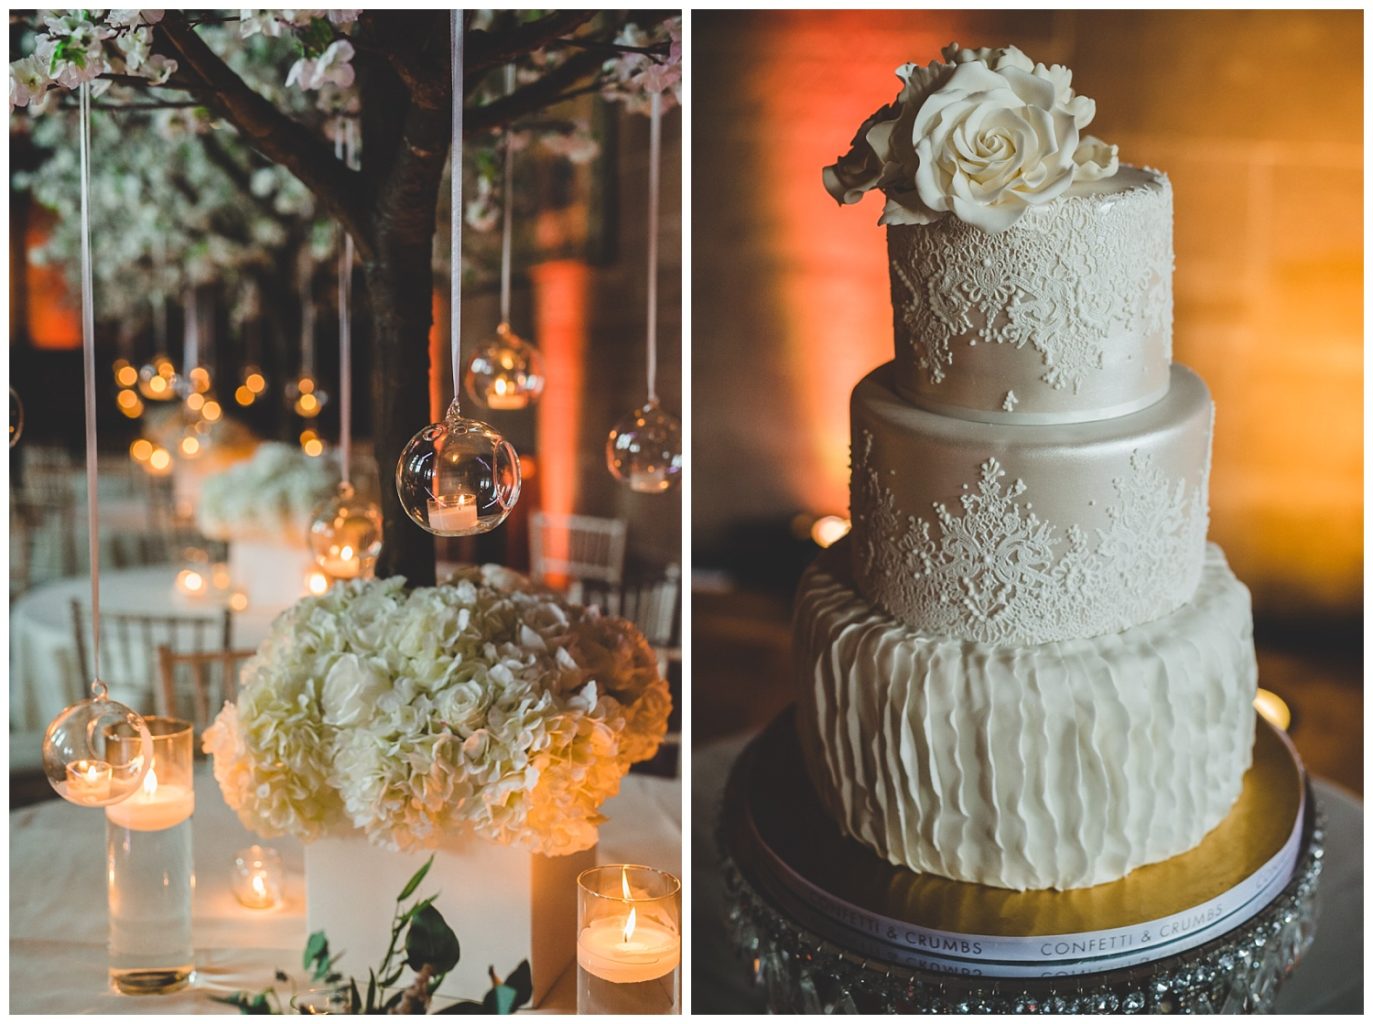 Peckforton Castle wedding cake